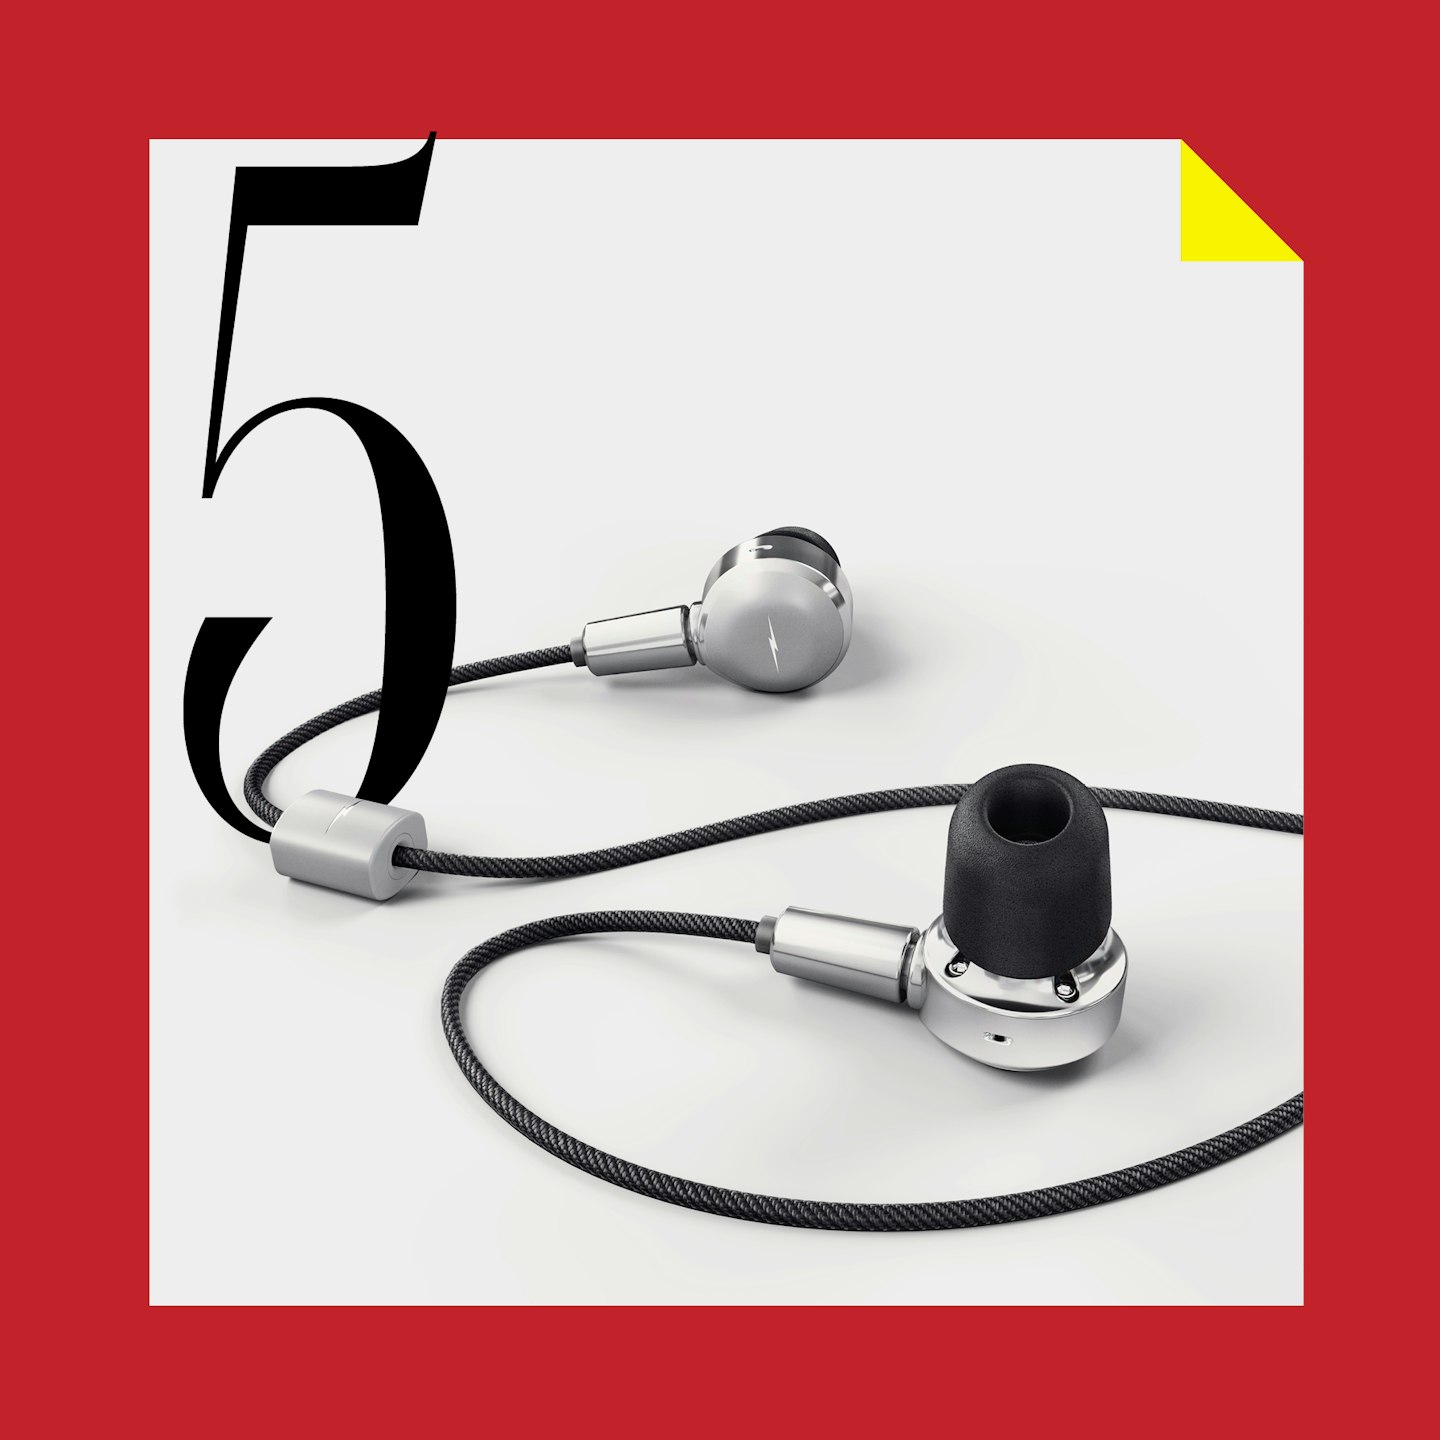 5 December - Shinola Canfield In-Ear Headphones